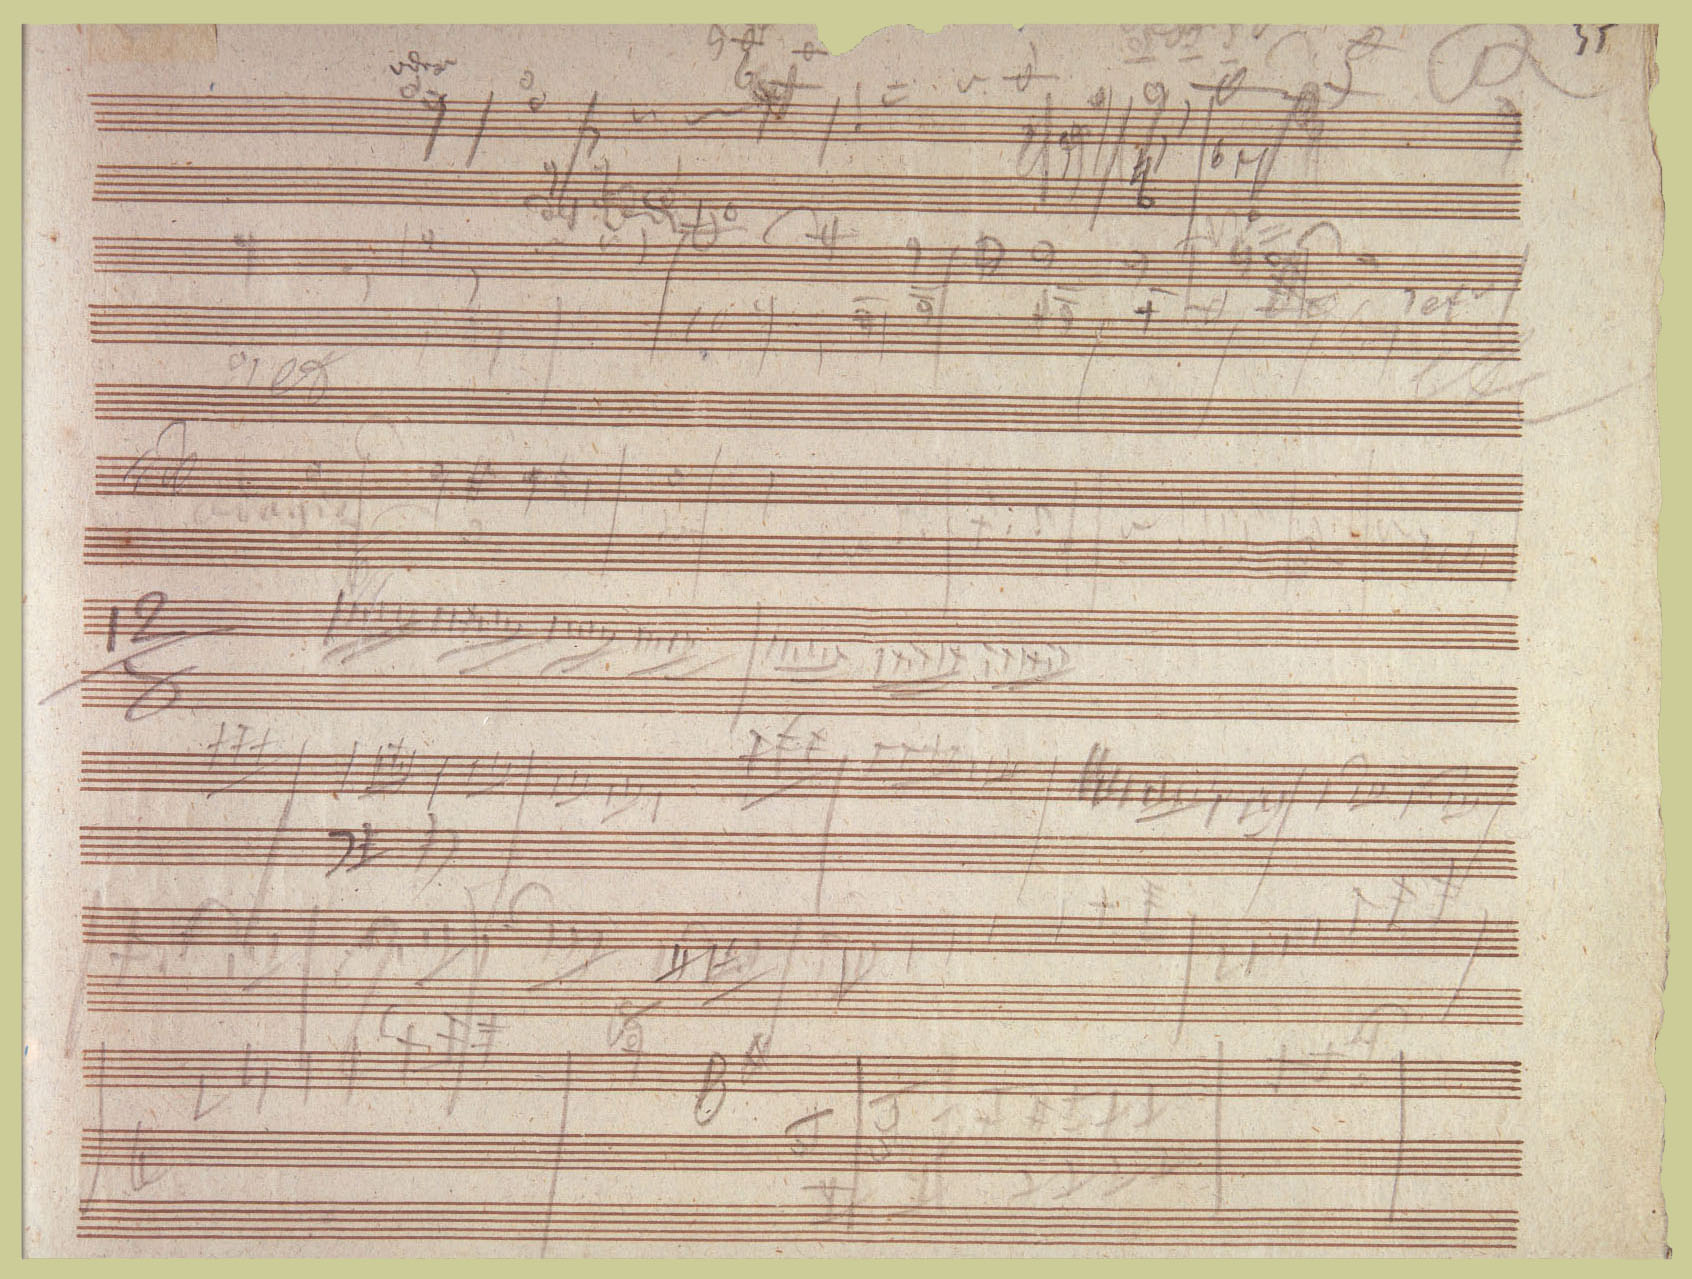 Page 35 of Beethoven’s Artaria 195 Sketchbook.